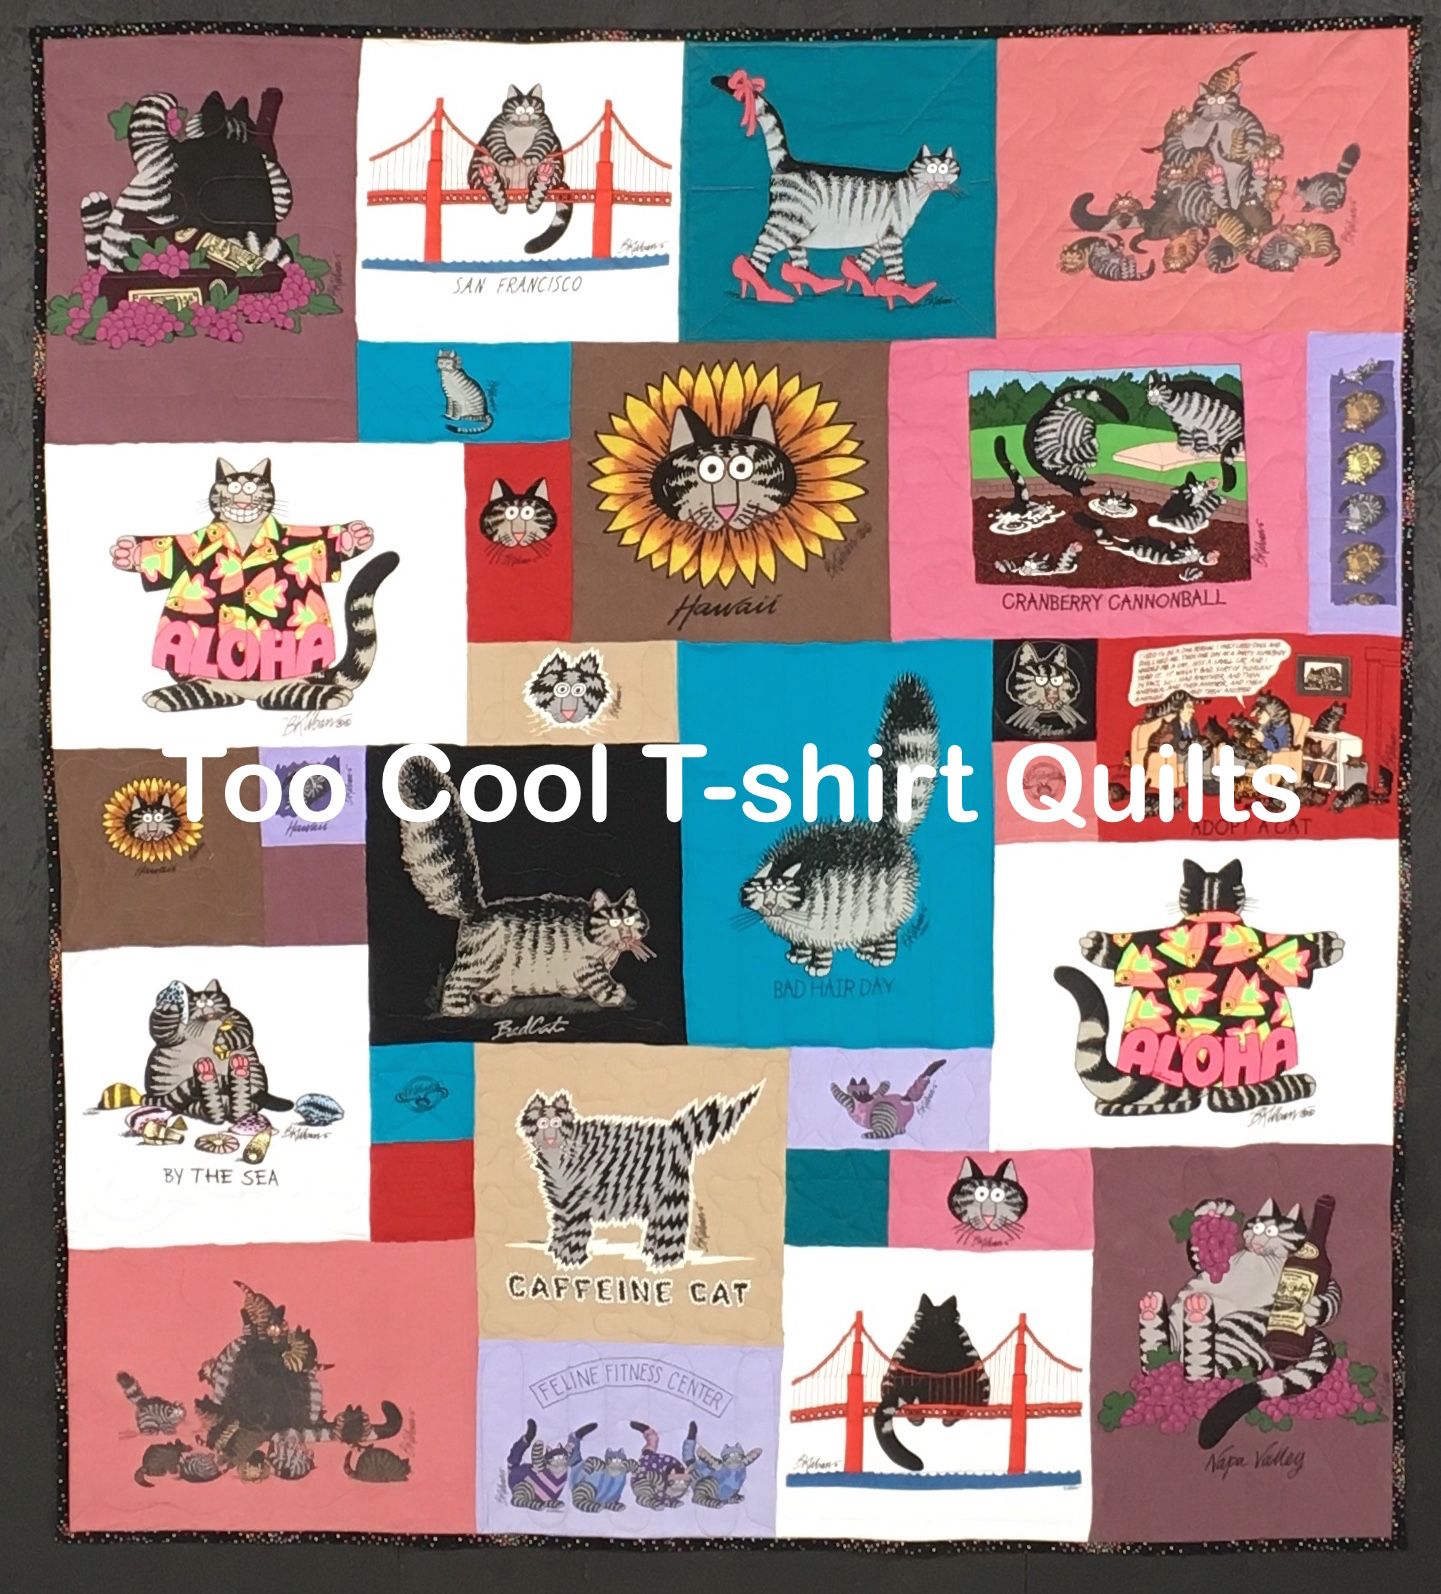 Kliban's Cats T-shirt quilt